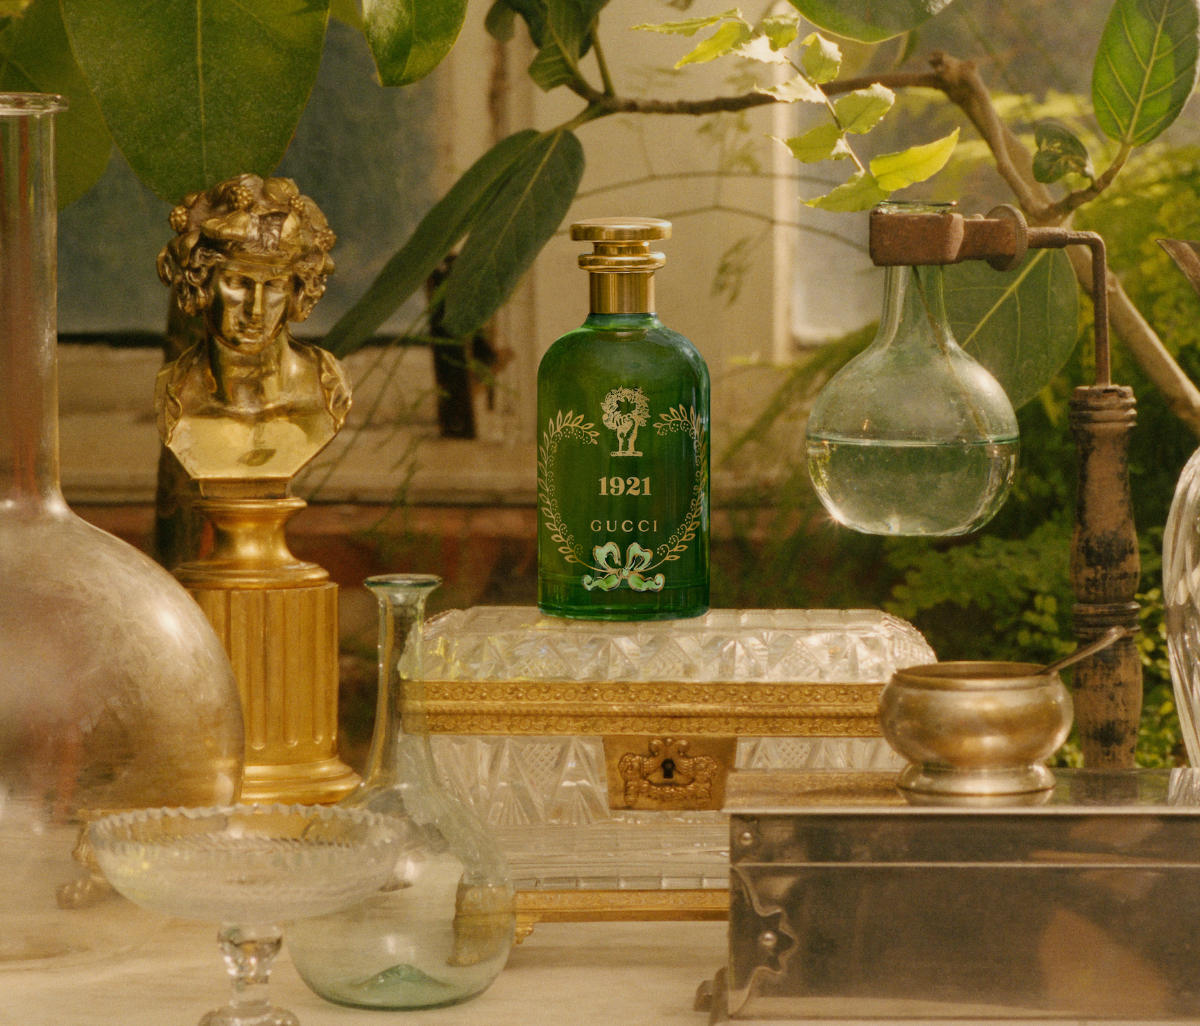 Gucci The Alchemists Garden 1921, Fragrance Sample